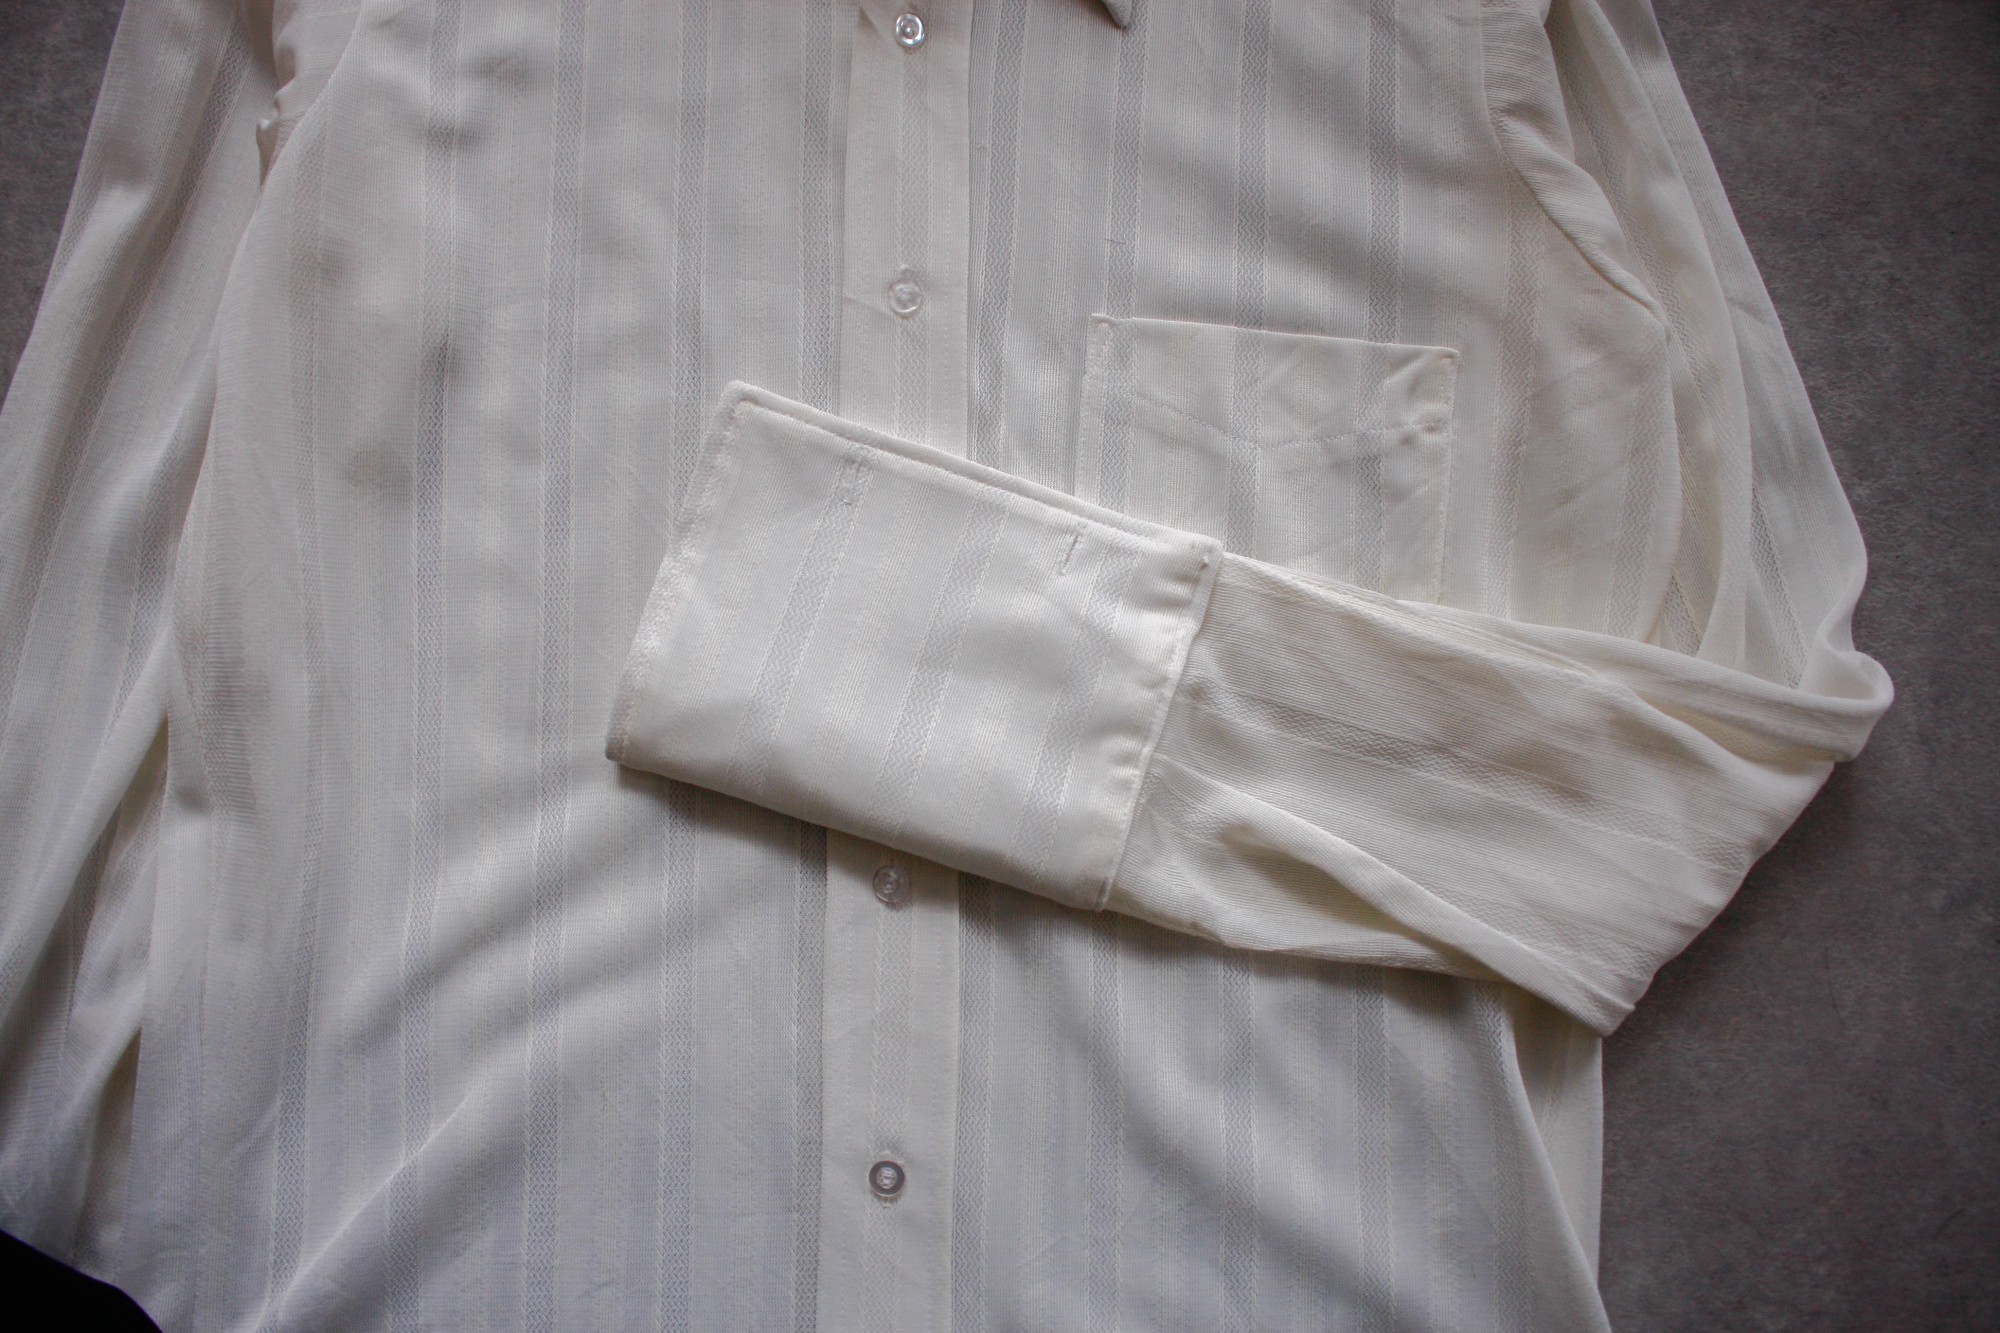 70s‘ towncraft dress shirt / タウンクラフト ドレス